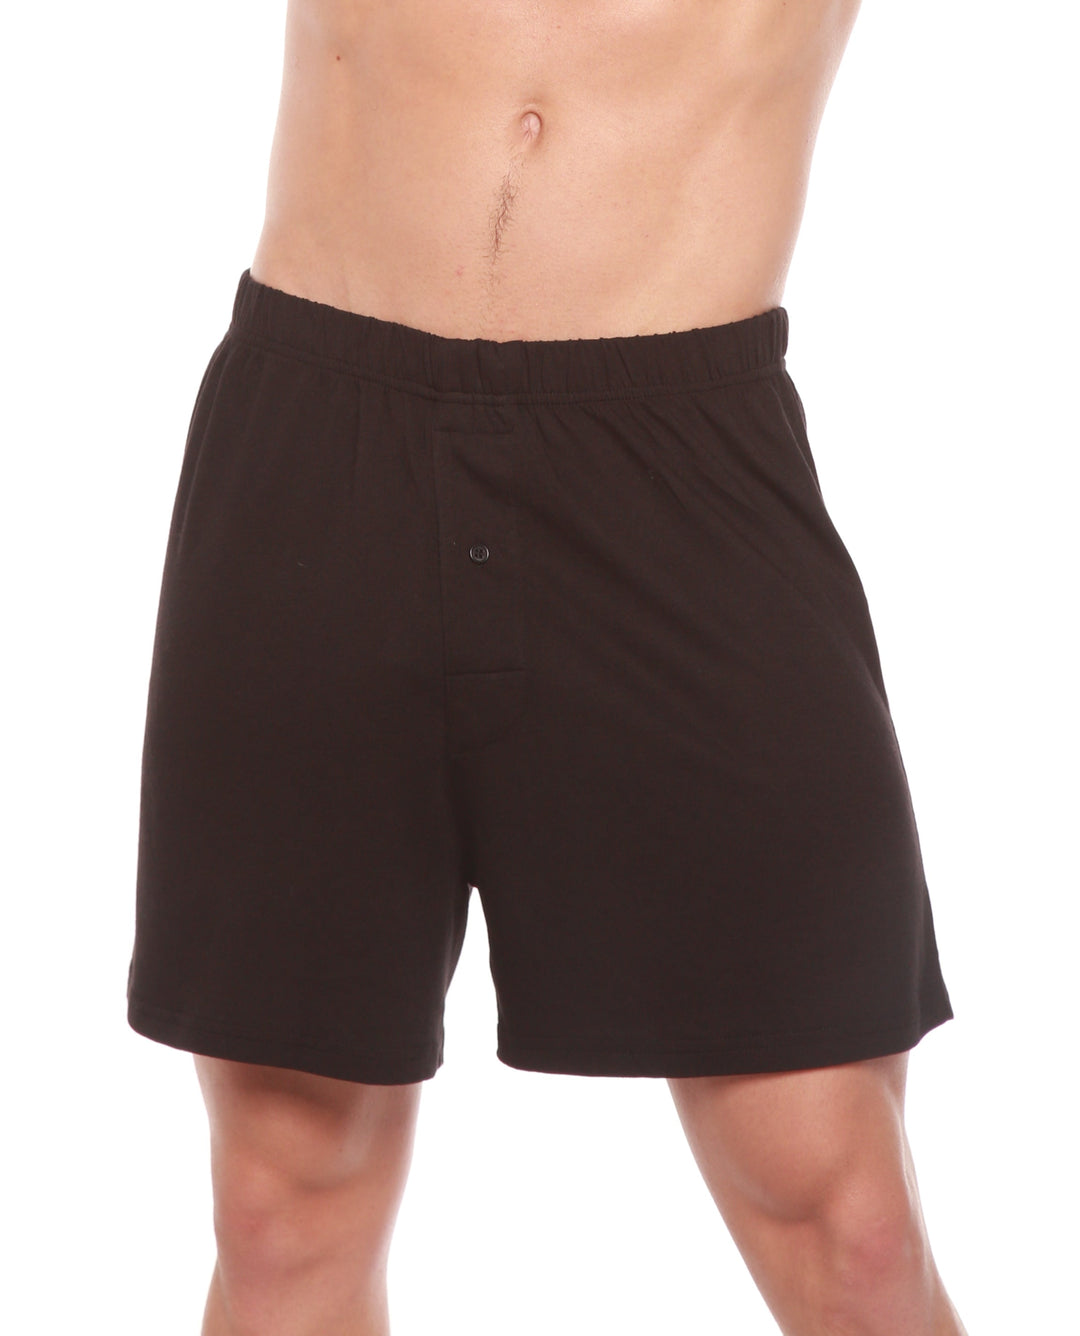 Men's Bamboo Viscose/Cotton Boxer Style Underwear Black Color - 5-pack